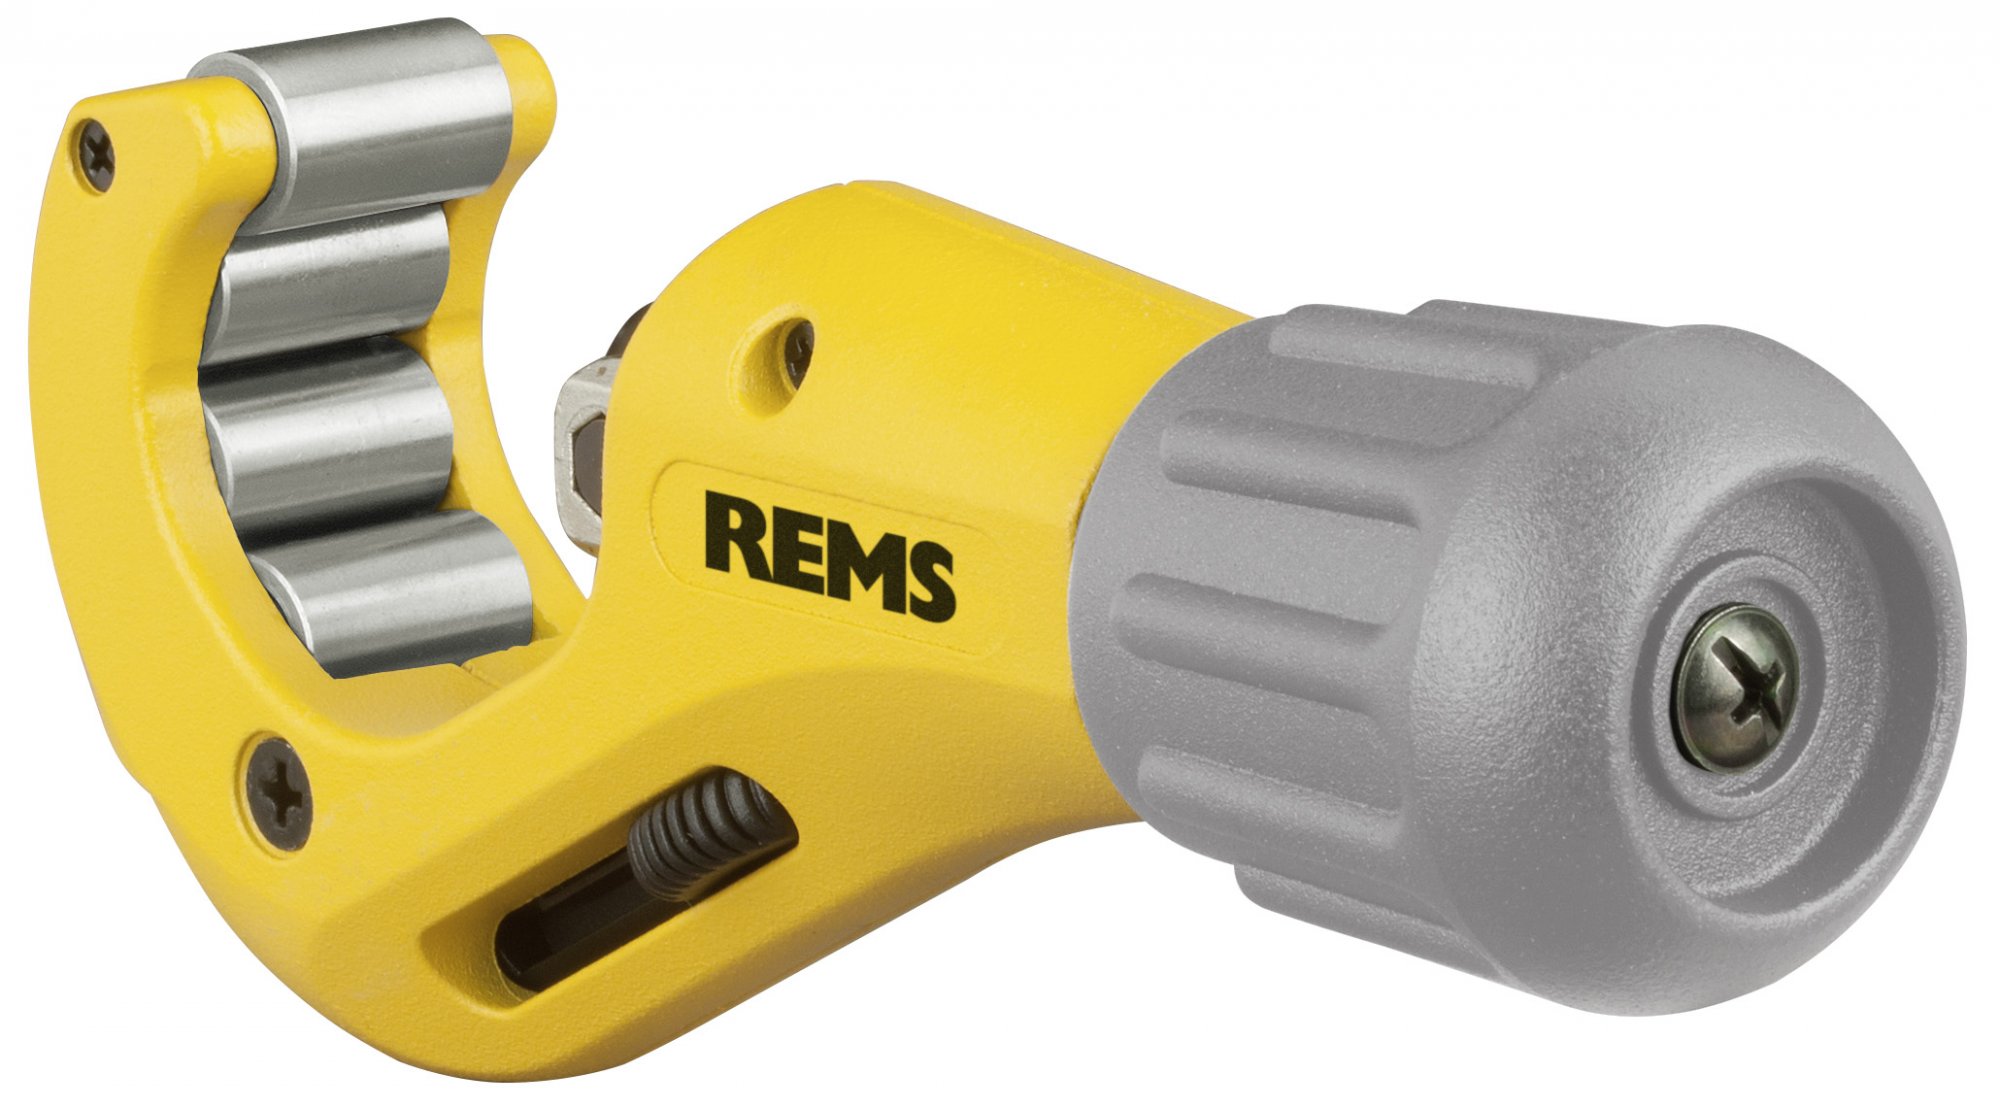 Rems RAS Cu-INOX 3-35 S Pijpsnijder - 3-35mm